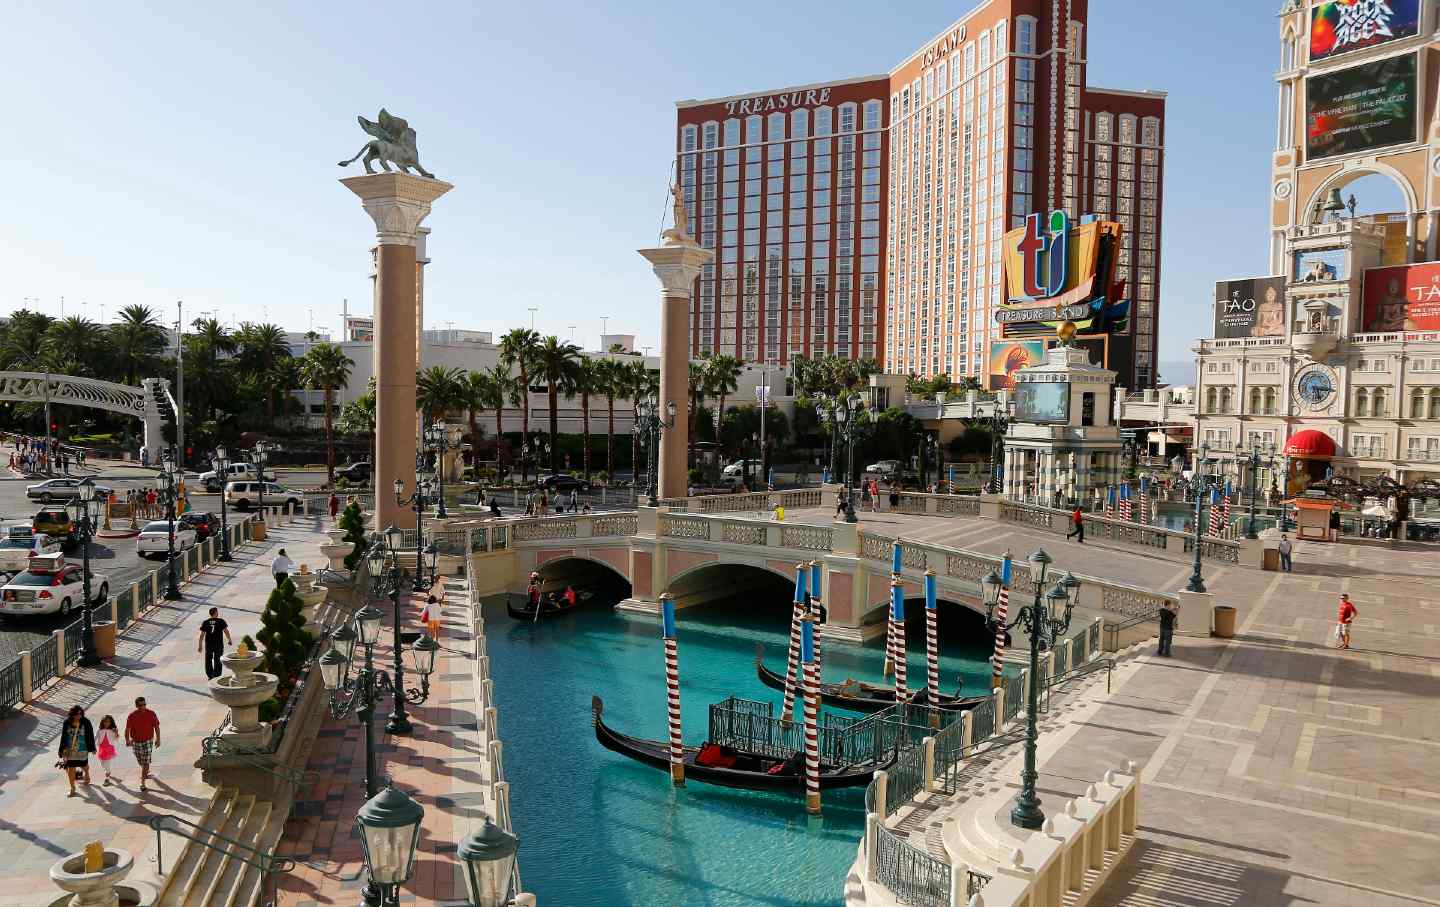 The Venetian resort in Las Vegas